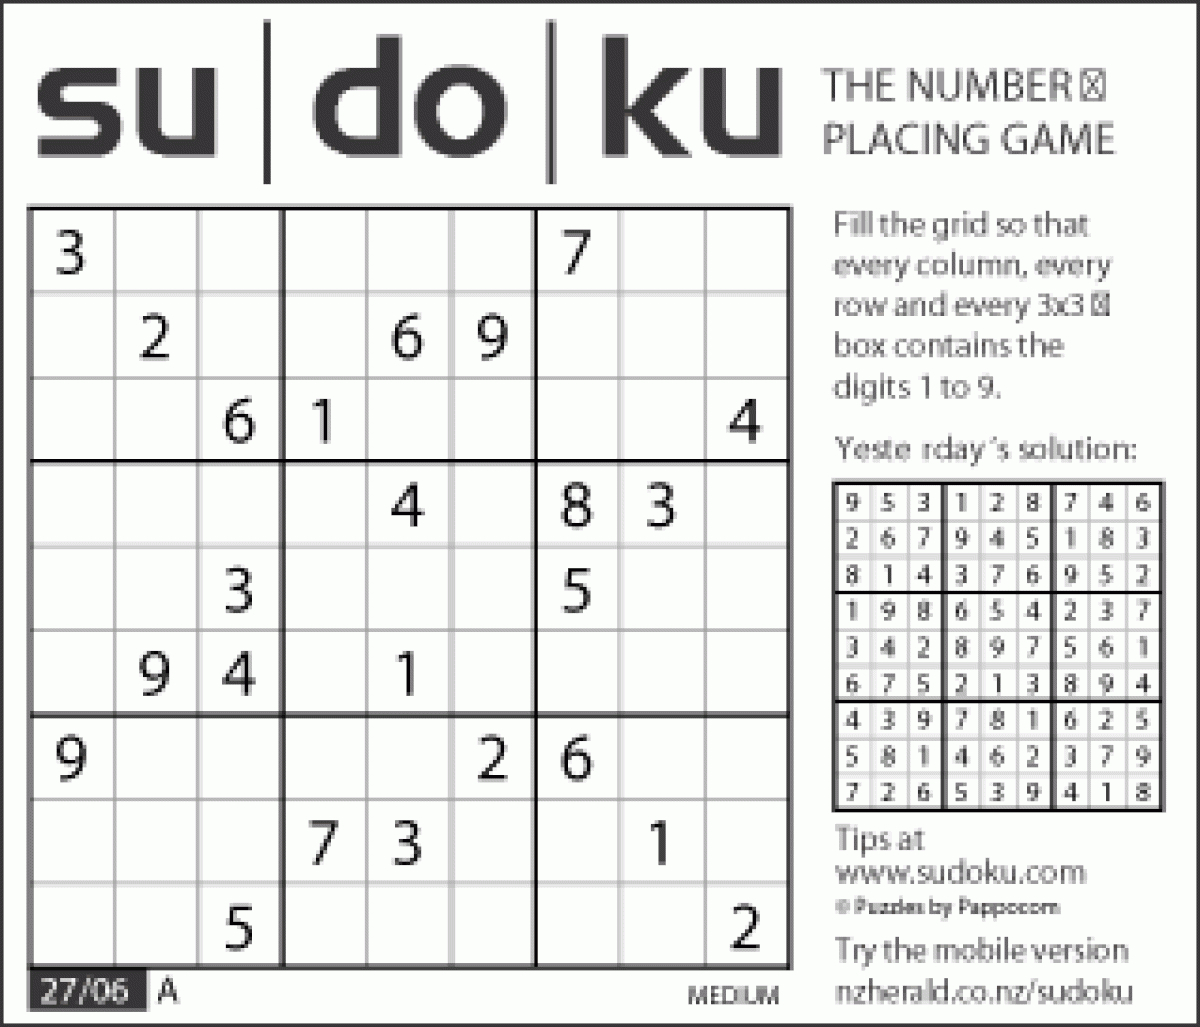 Sudoku Puzzle For June 27 (Medium) - Nz Herald pour Sudoku Gs